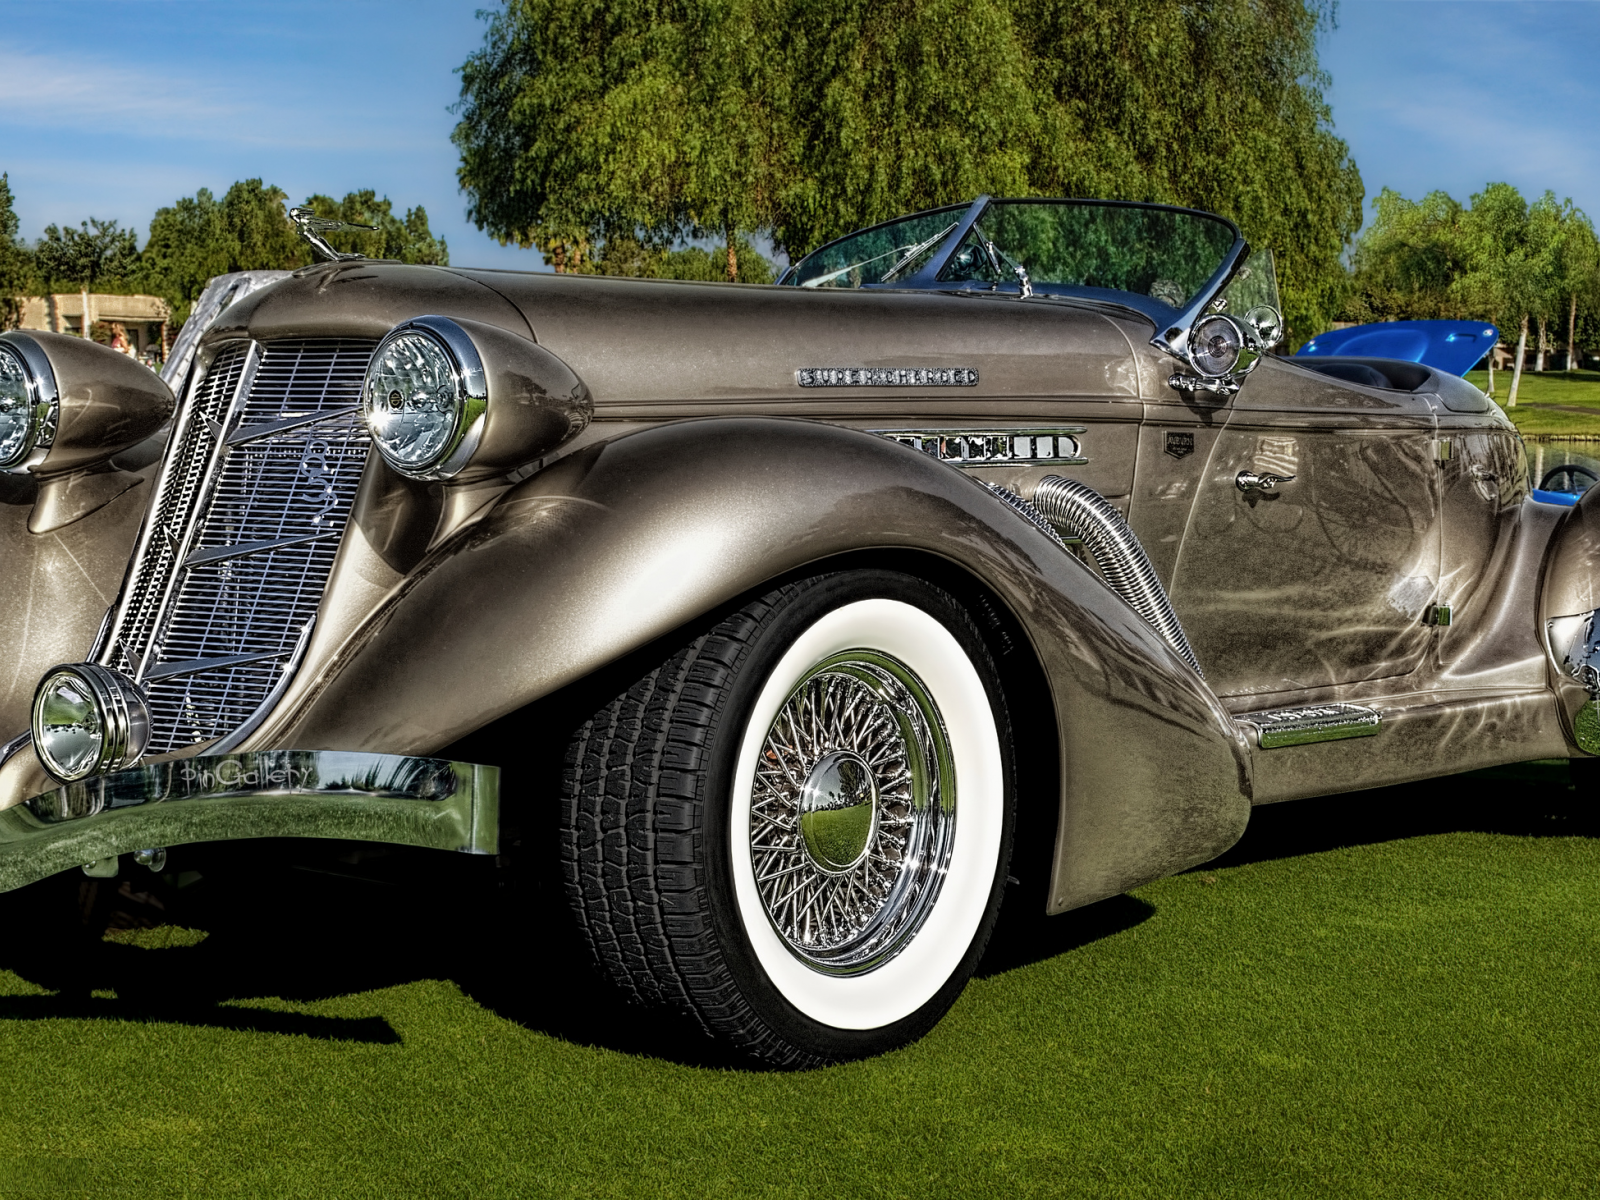 автомобиль, auburn, speedster, 1936, dual, cowl, car, old, front, lebaron, convertible, luxury, retro, silver, sun, summer, see, nice, pingallery, wide